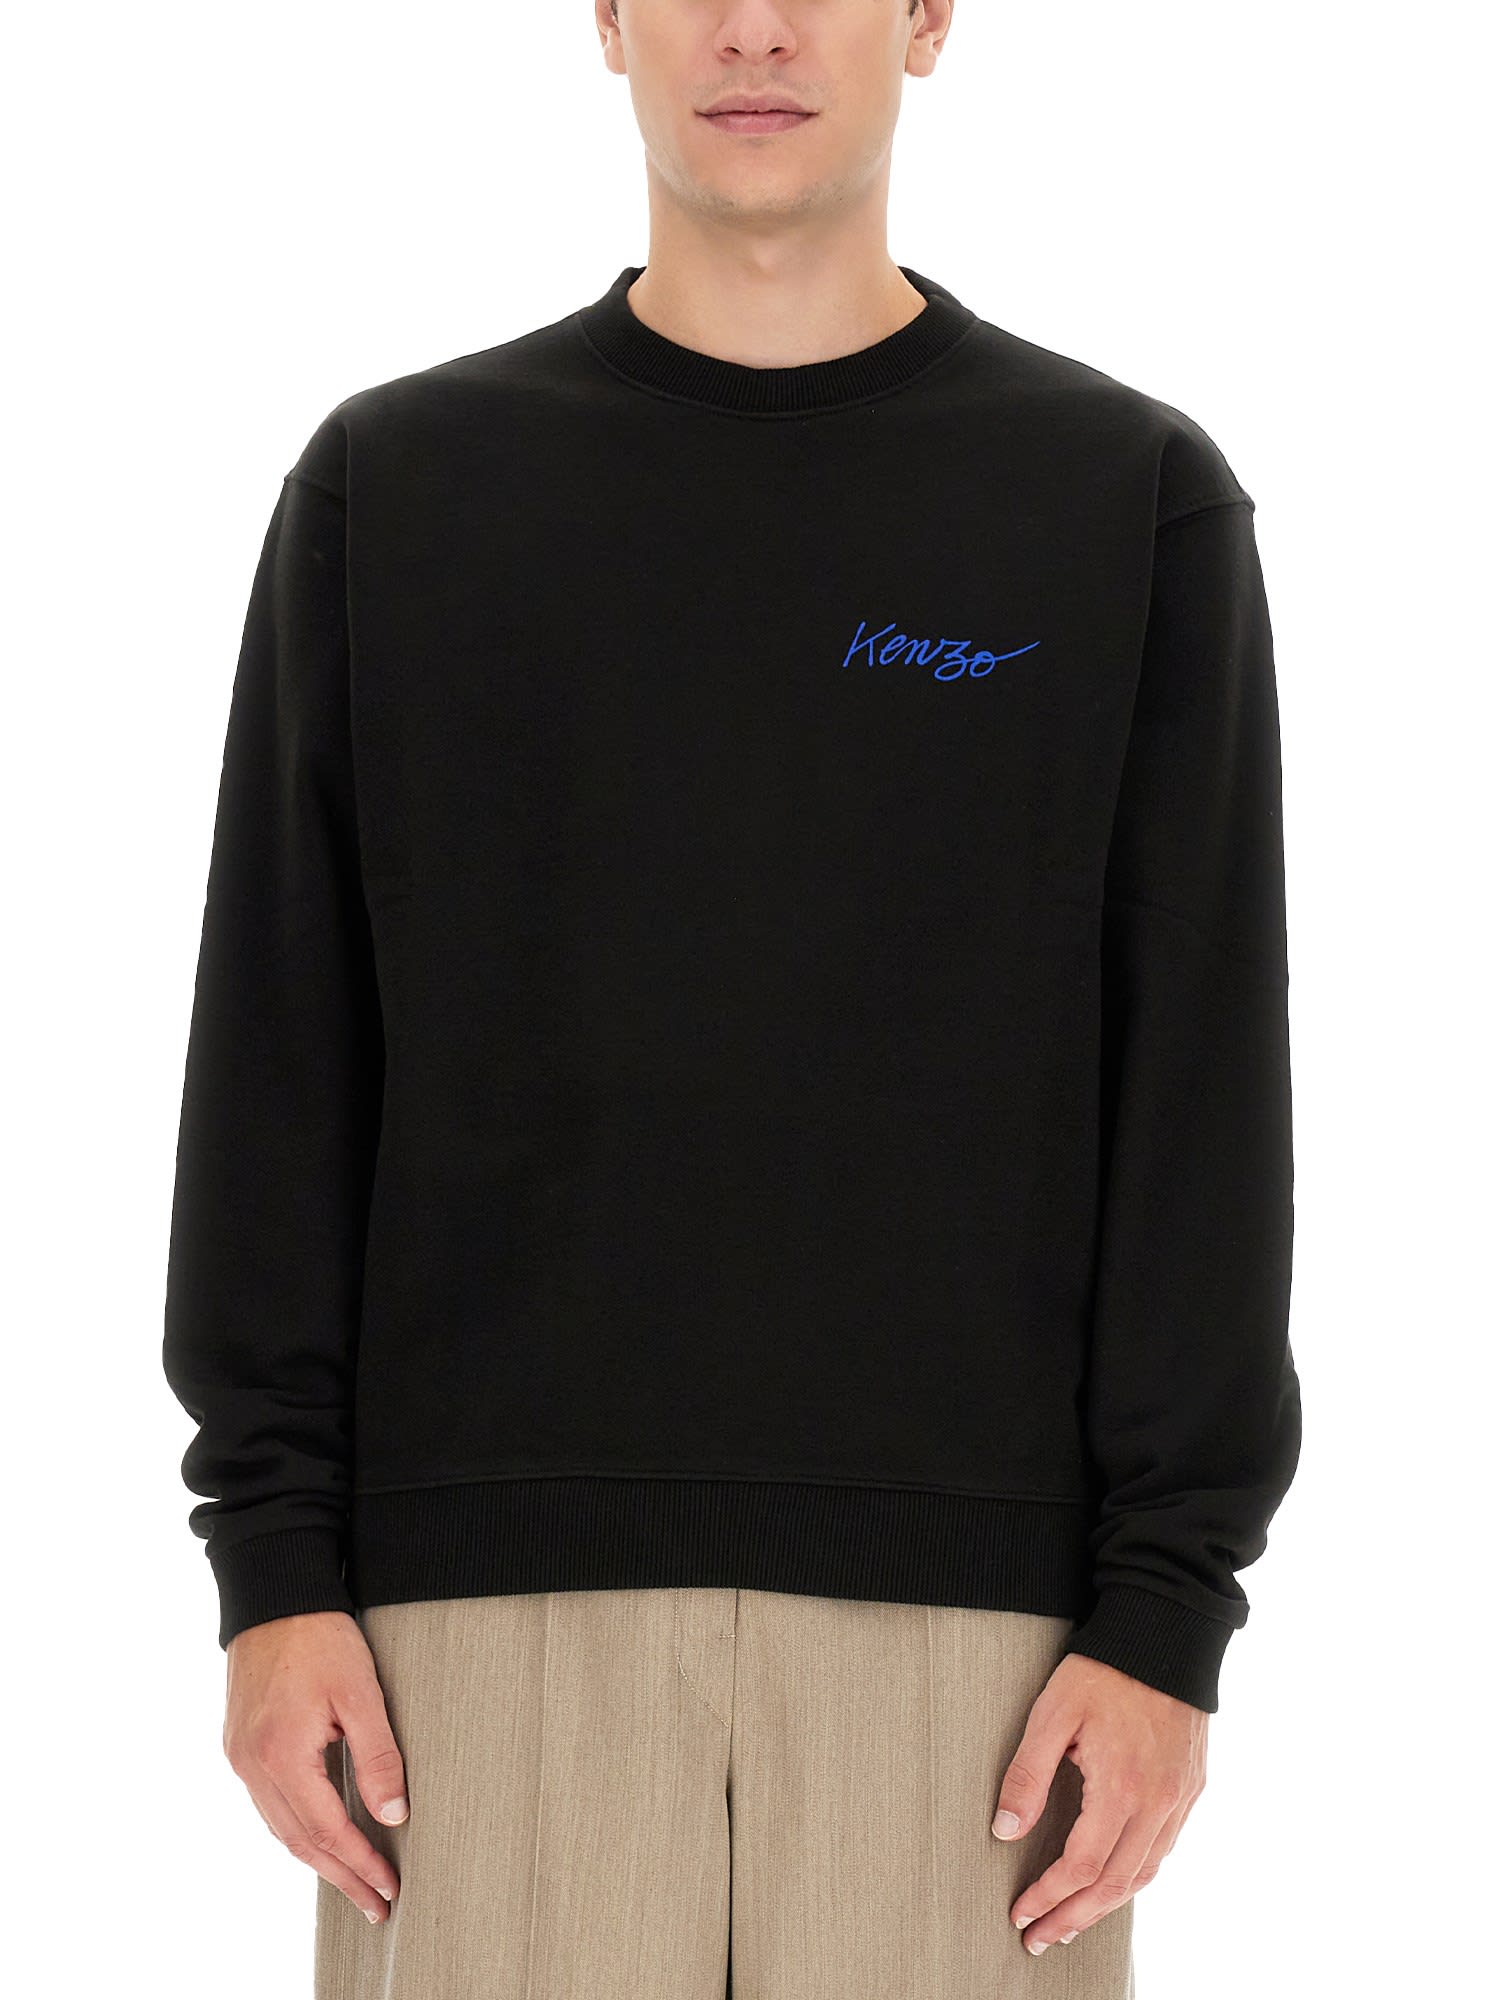 Kenzo Poppy Sweatshirt